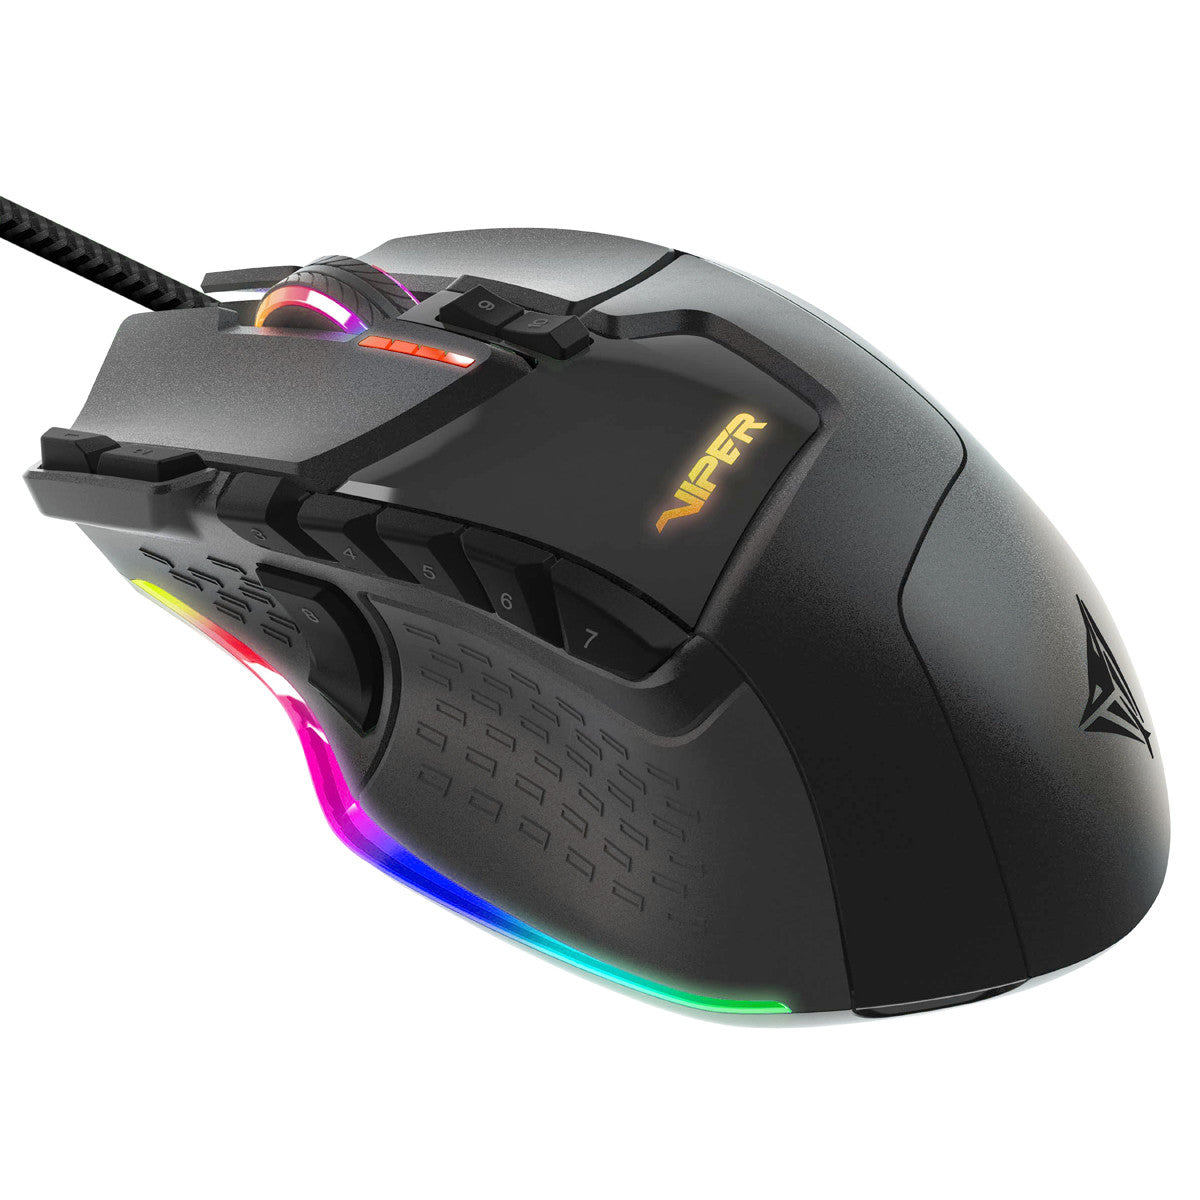 Patriot Viper V570 Blackout Edition RGB Laser Gaming Mouse